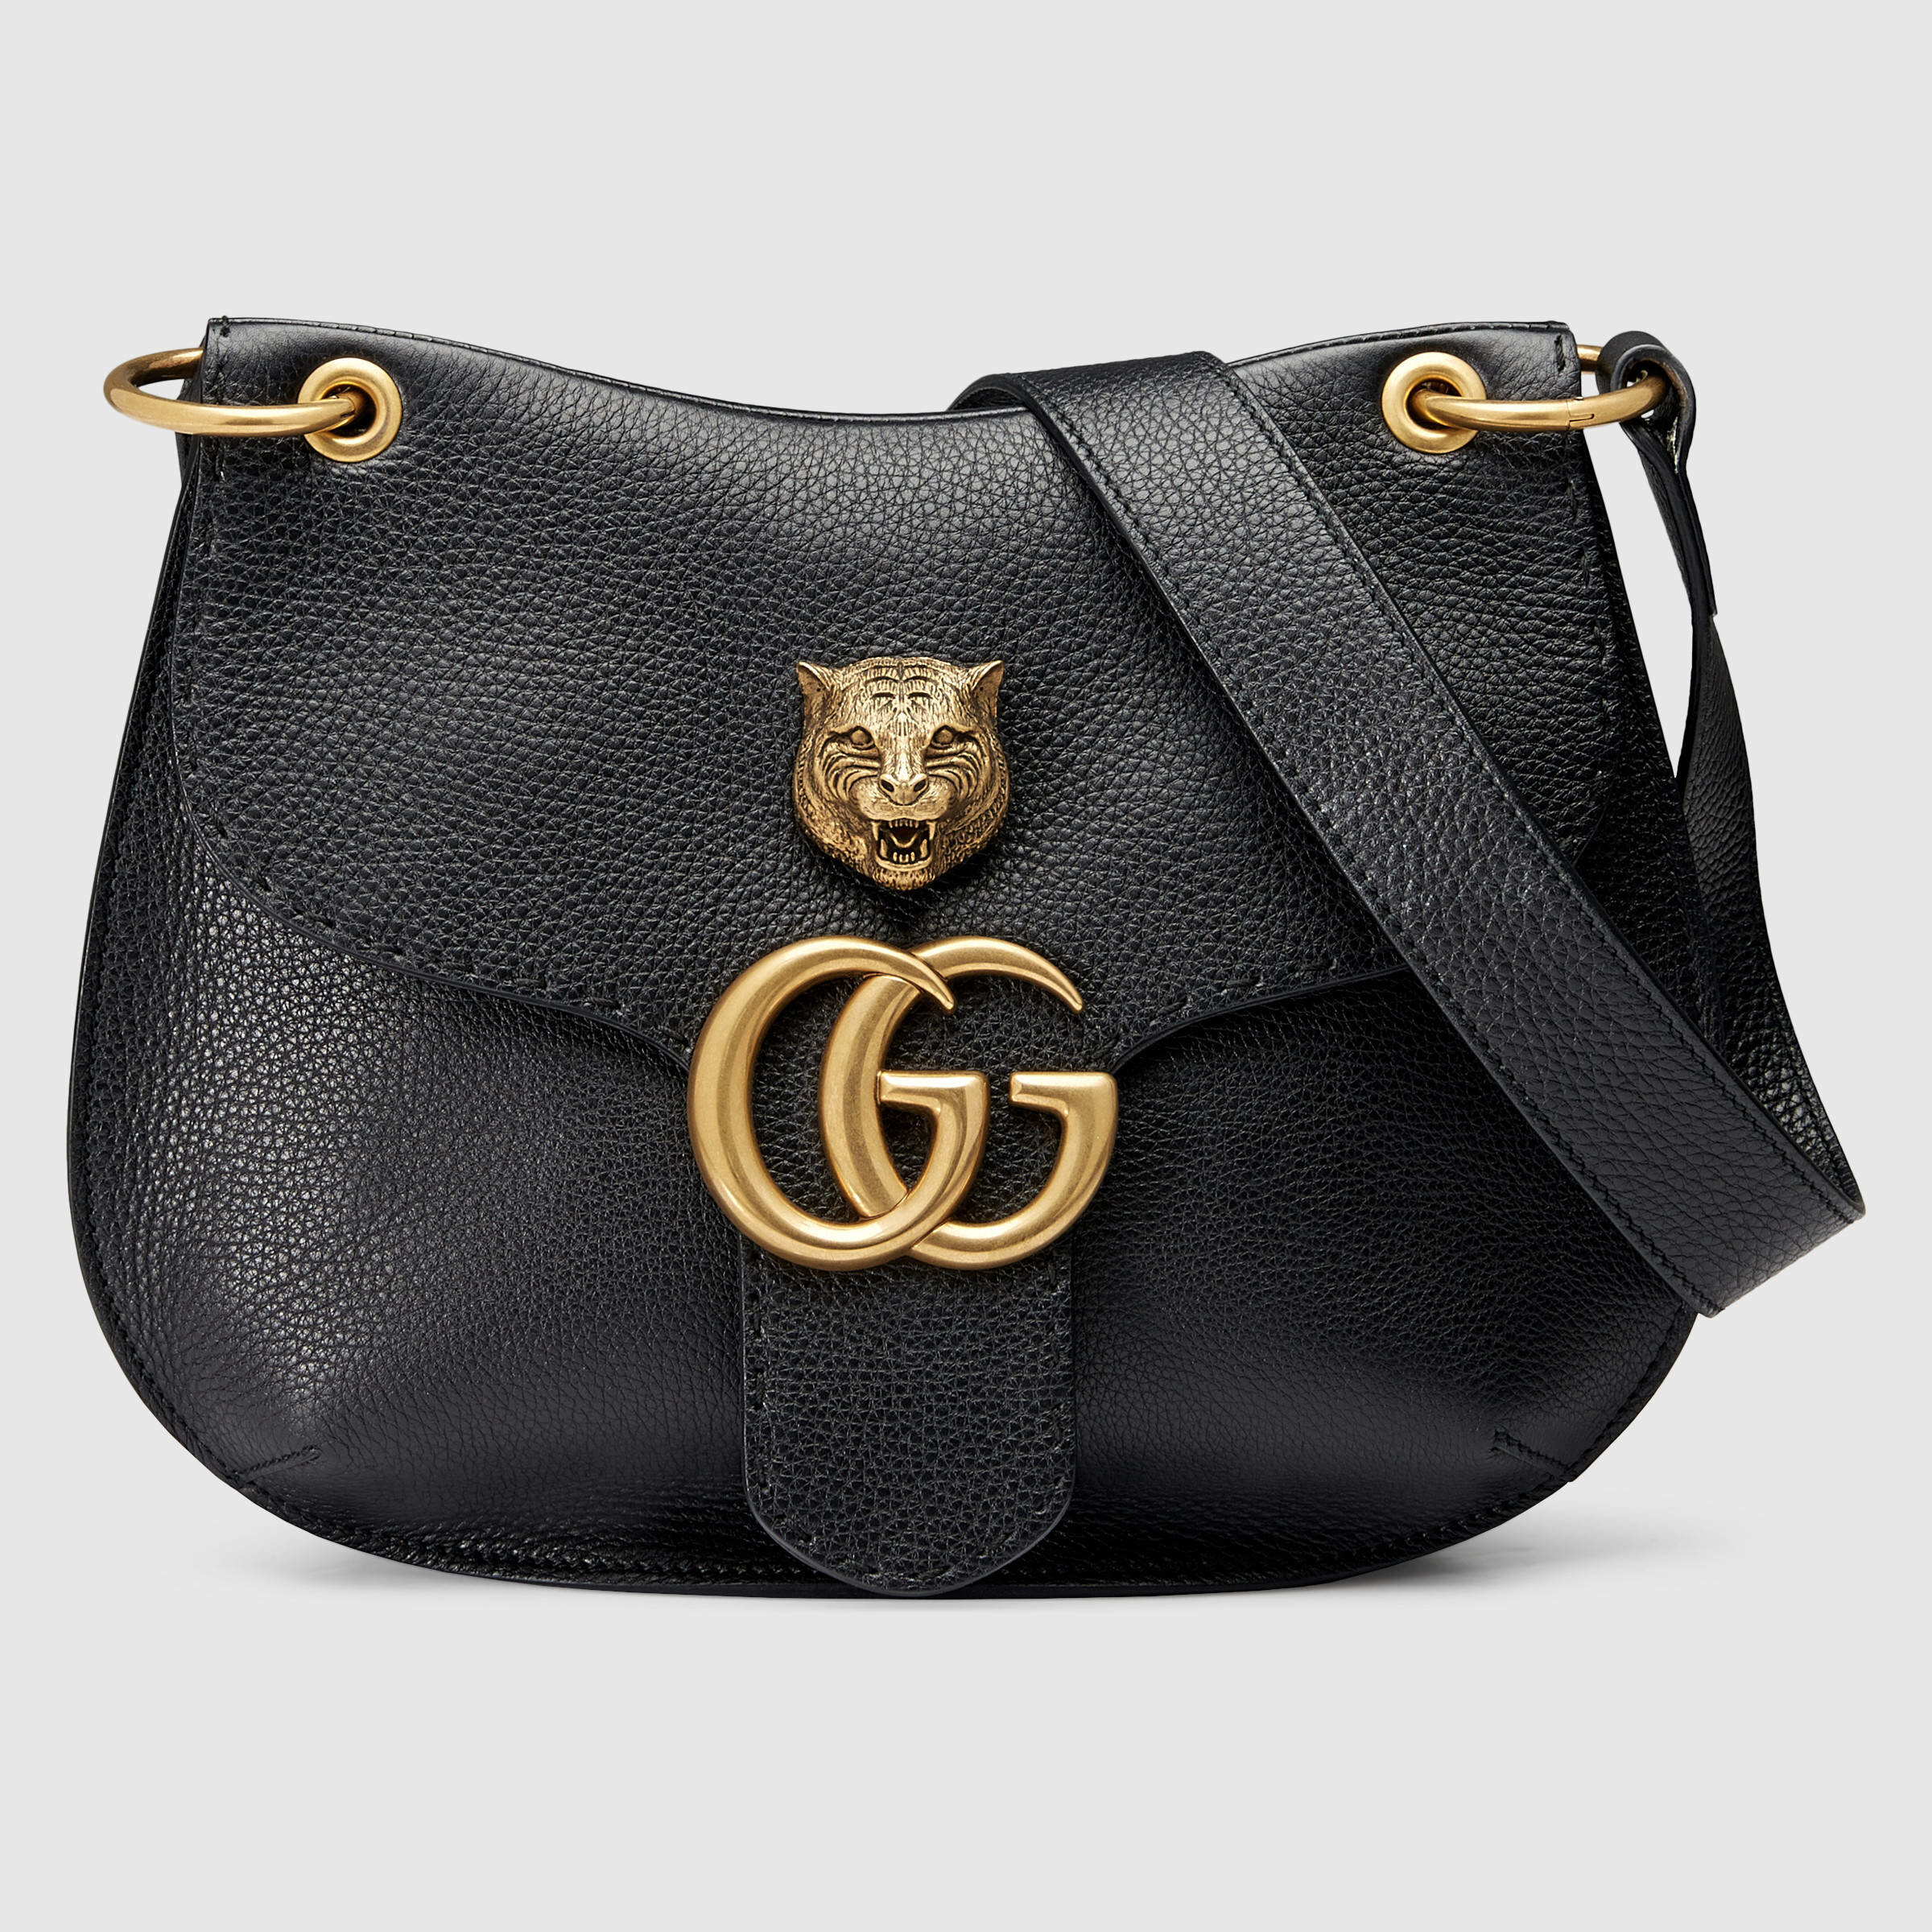 Gucci Marmont Animalier Shoulder Bag in Black Leather.jpg